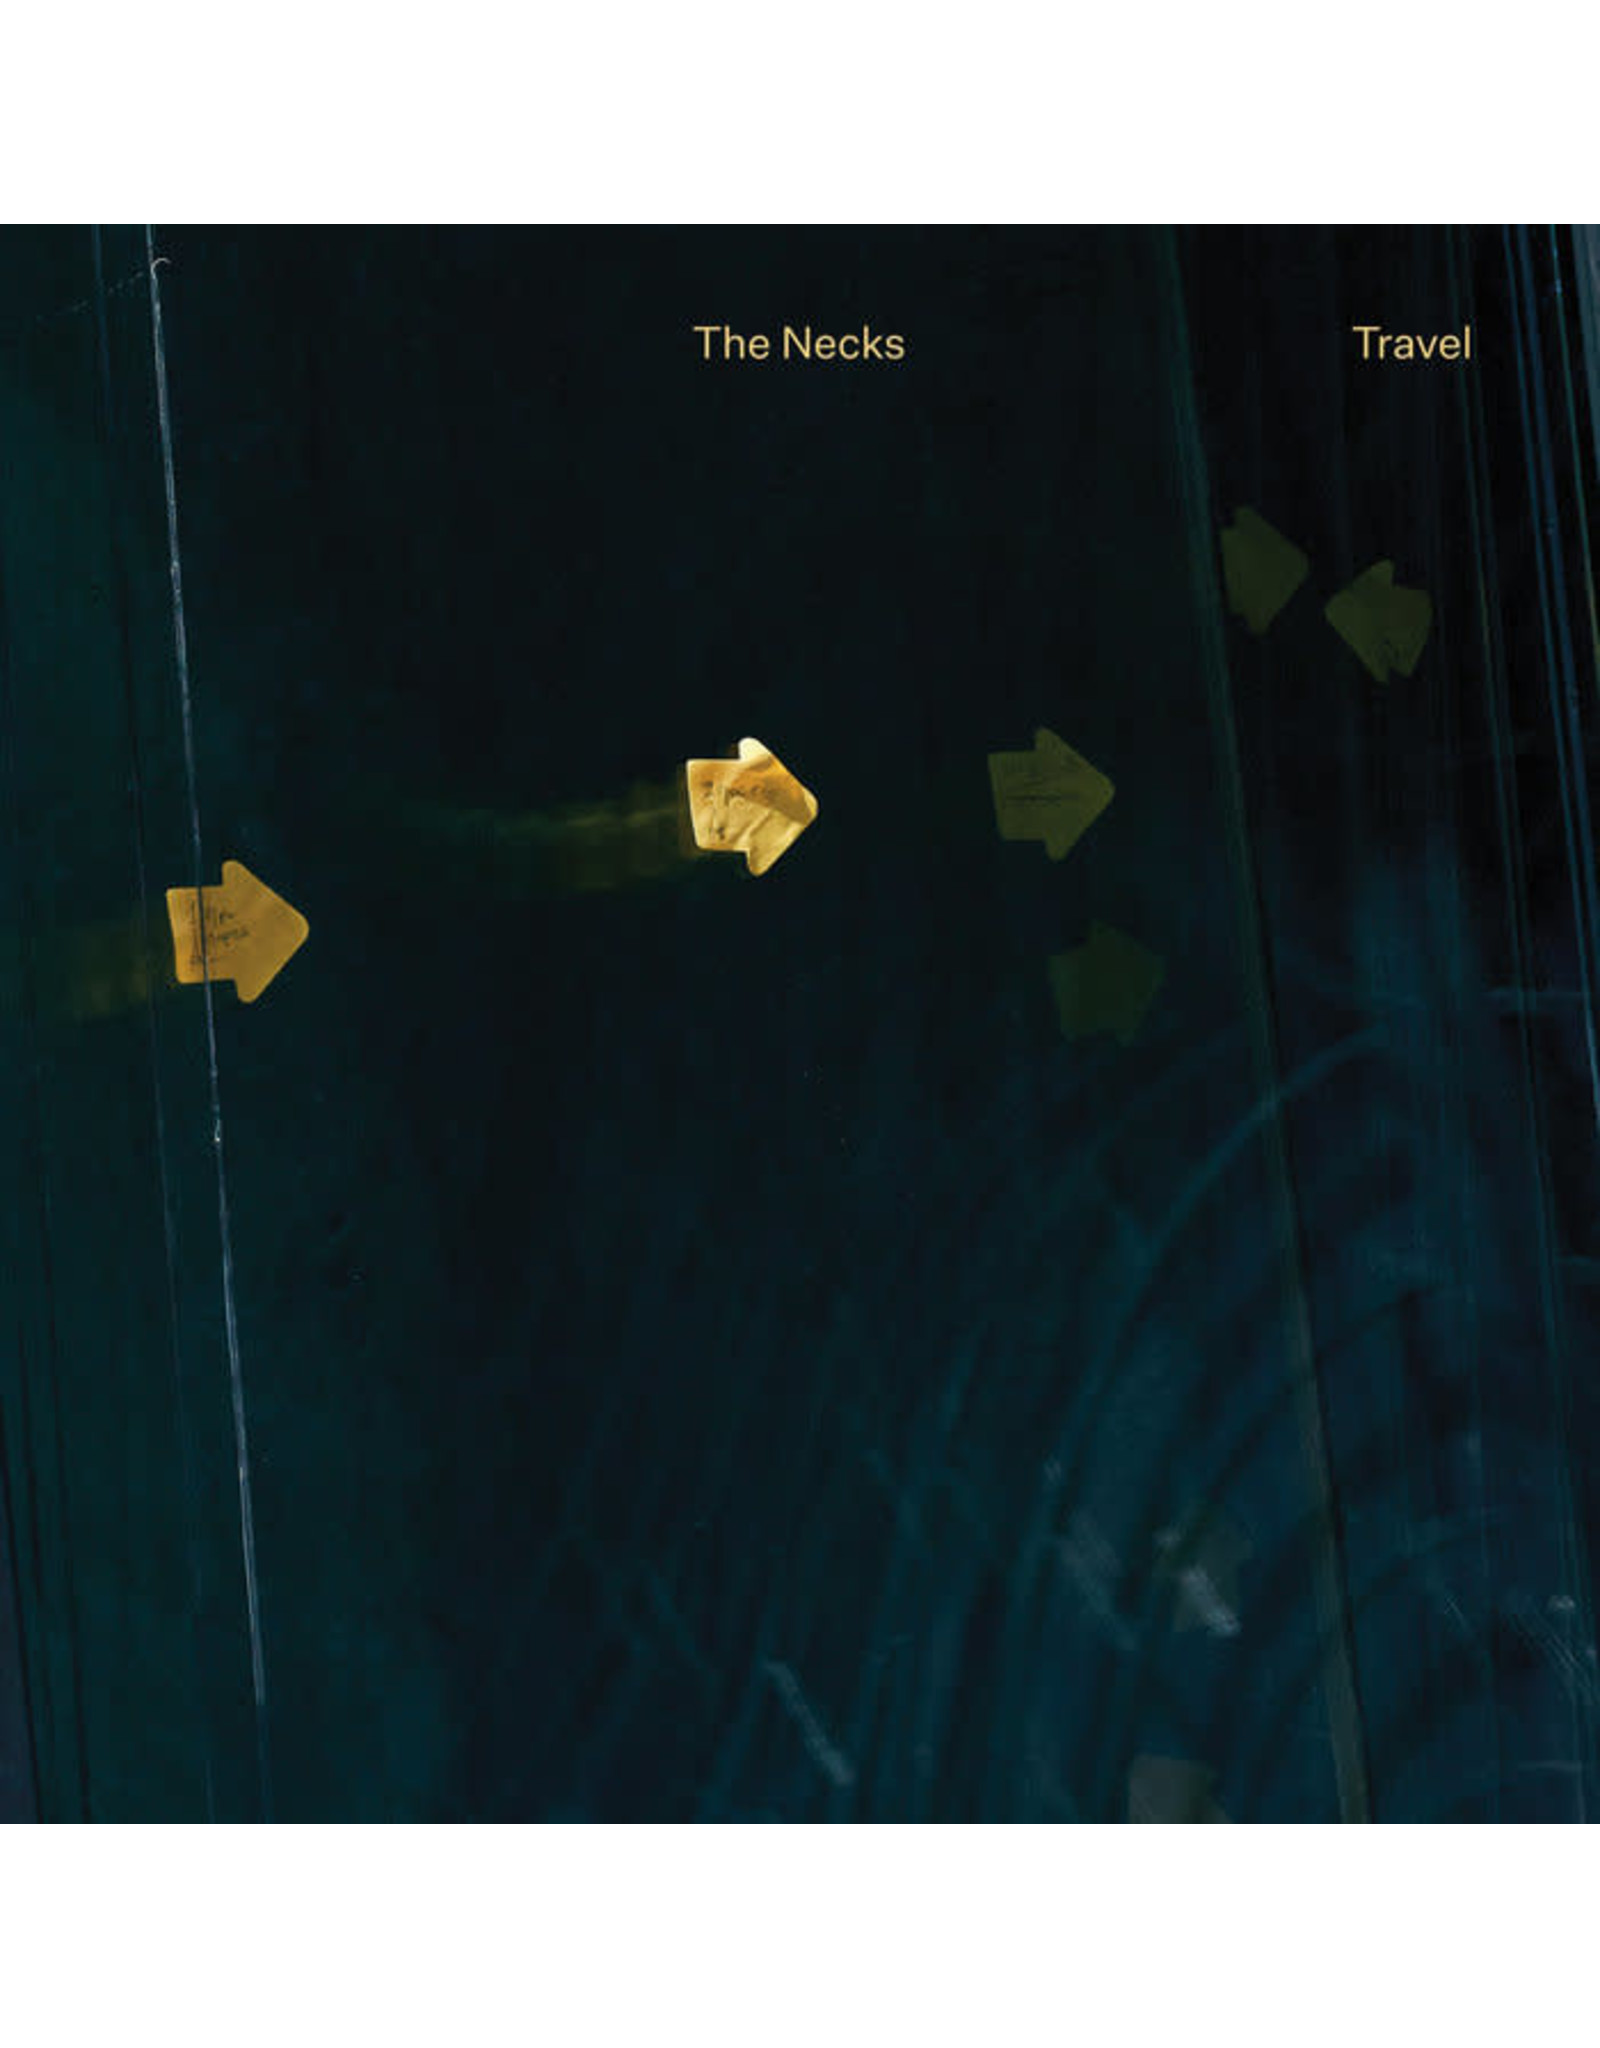 Northern Spy Necks, The: Travel LP